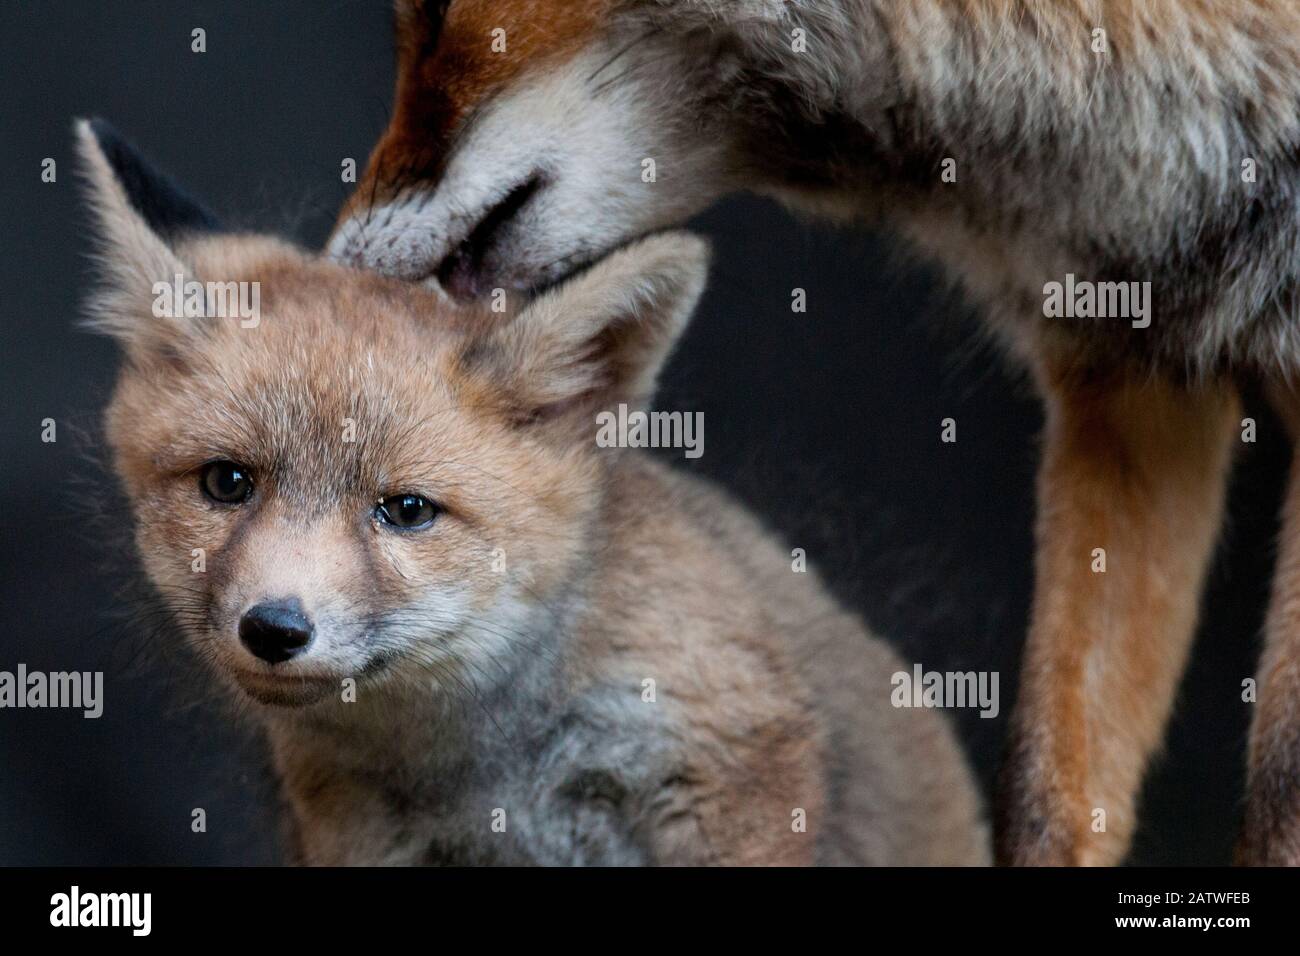 Red fox (Vulpes vulpes) vixen grooming cub, Sado Estuary, Portugal. May Stock Photo